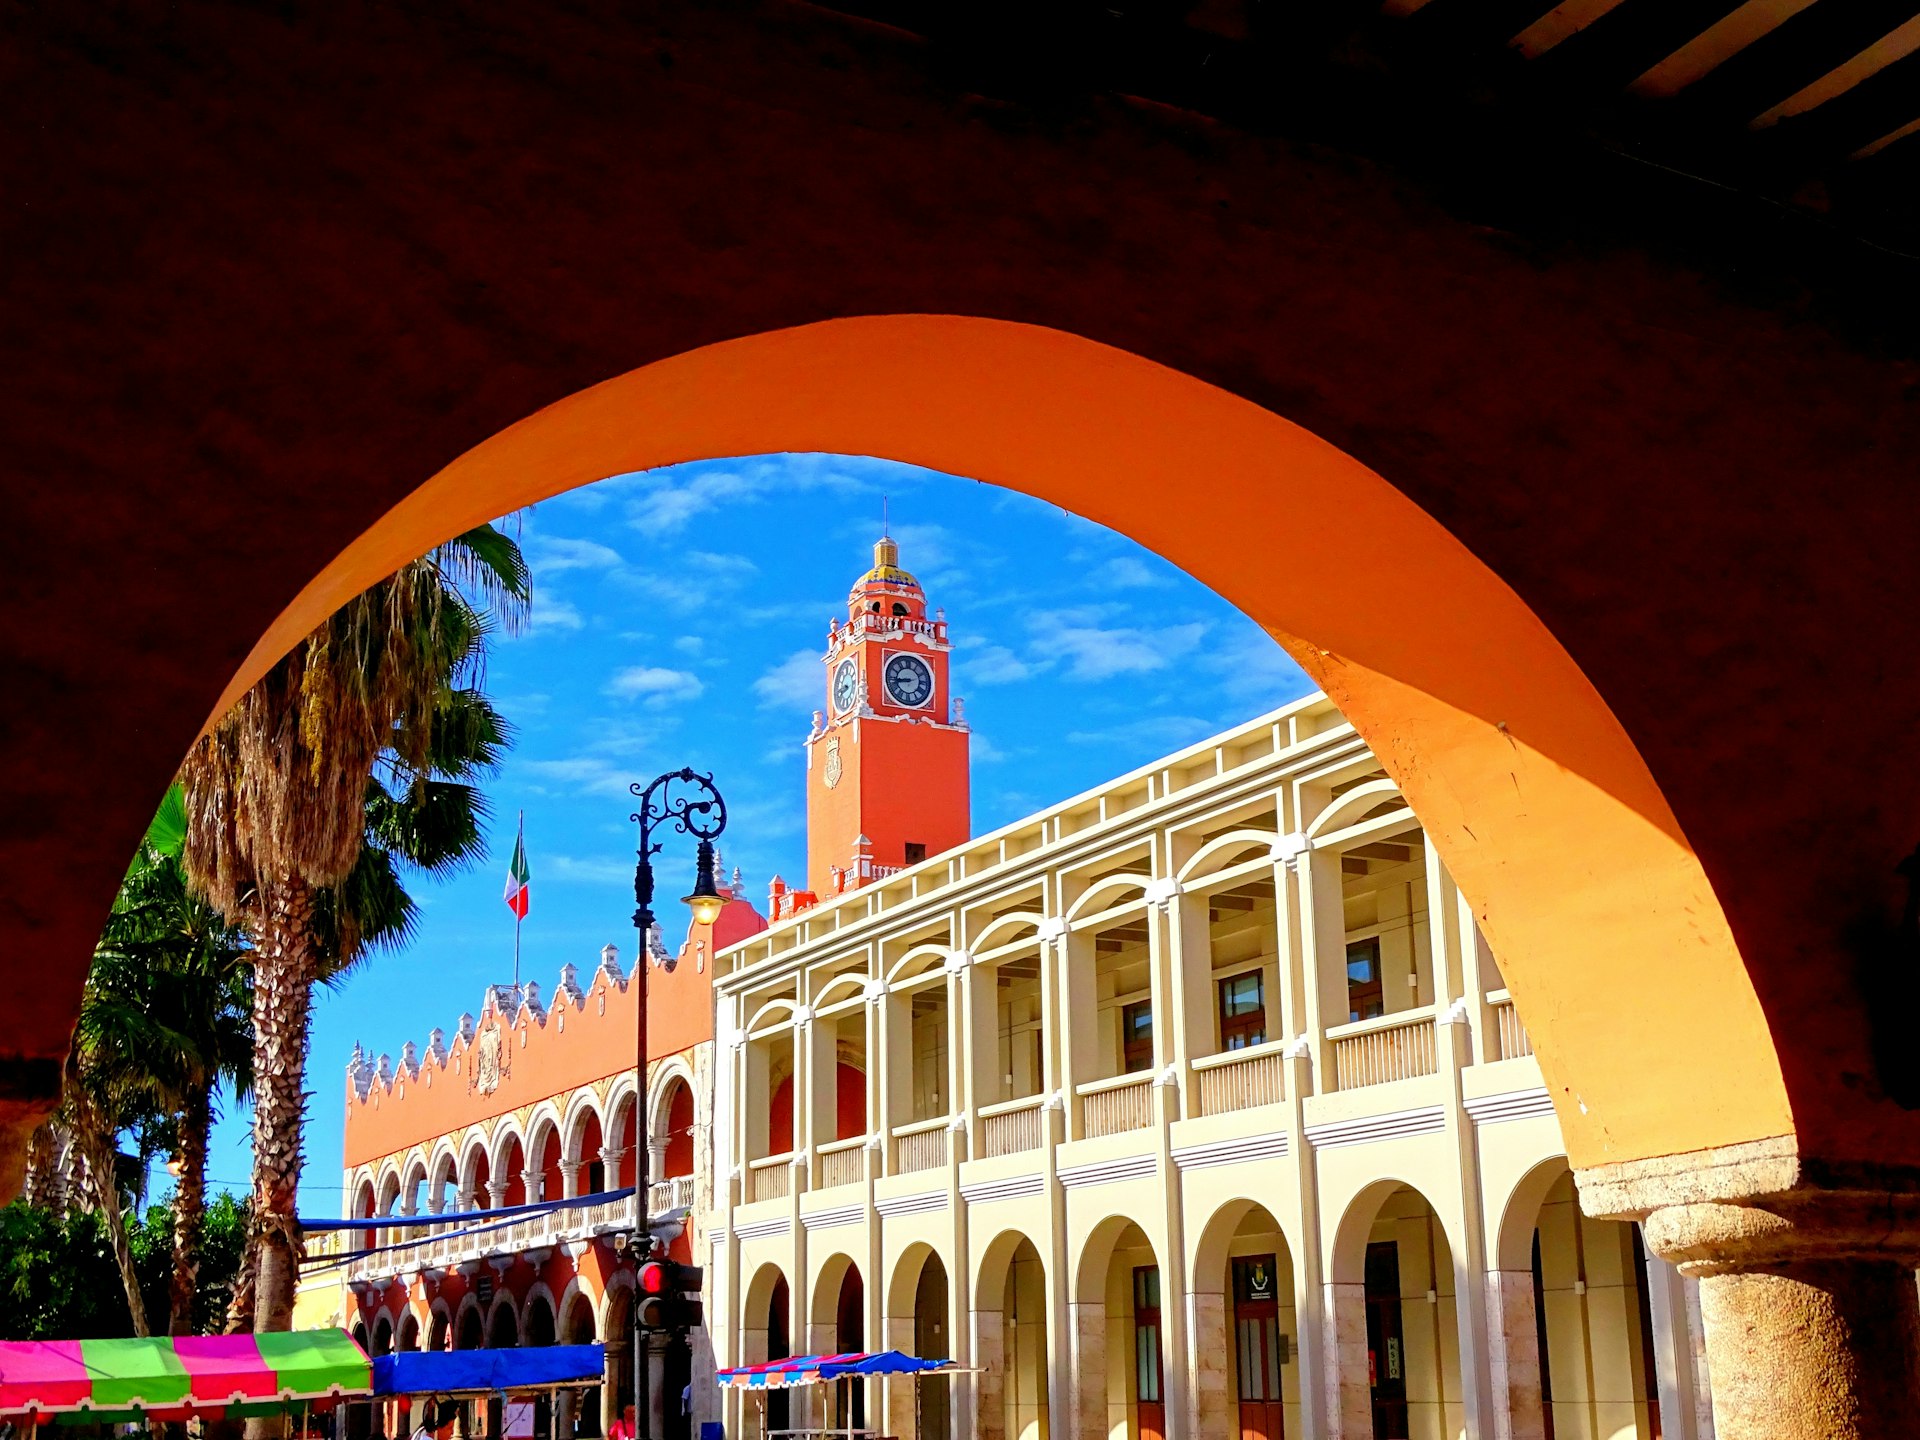 The historic Palacio Municipal in Mérida viewed through an archway